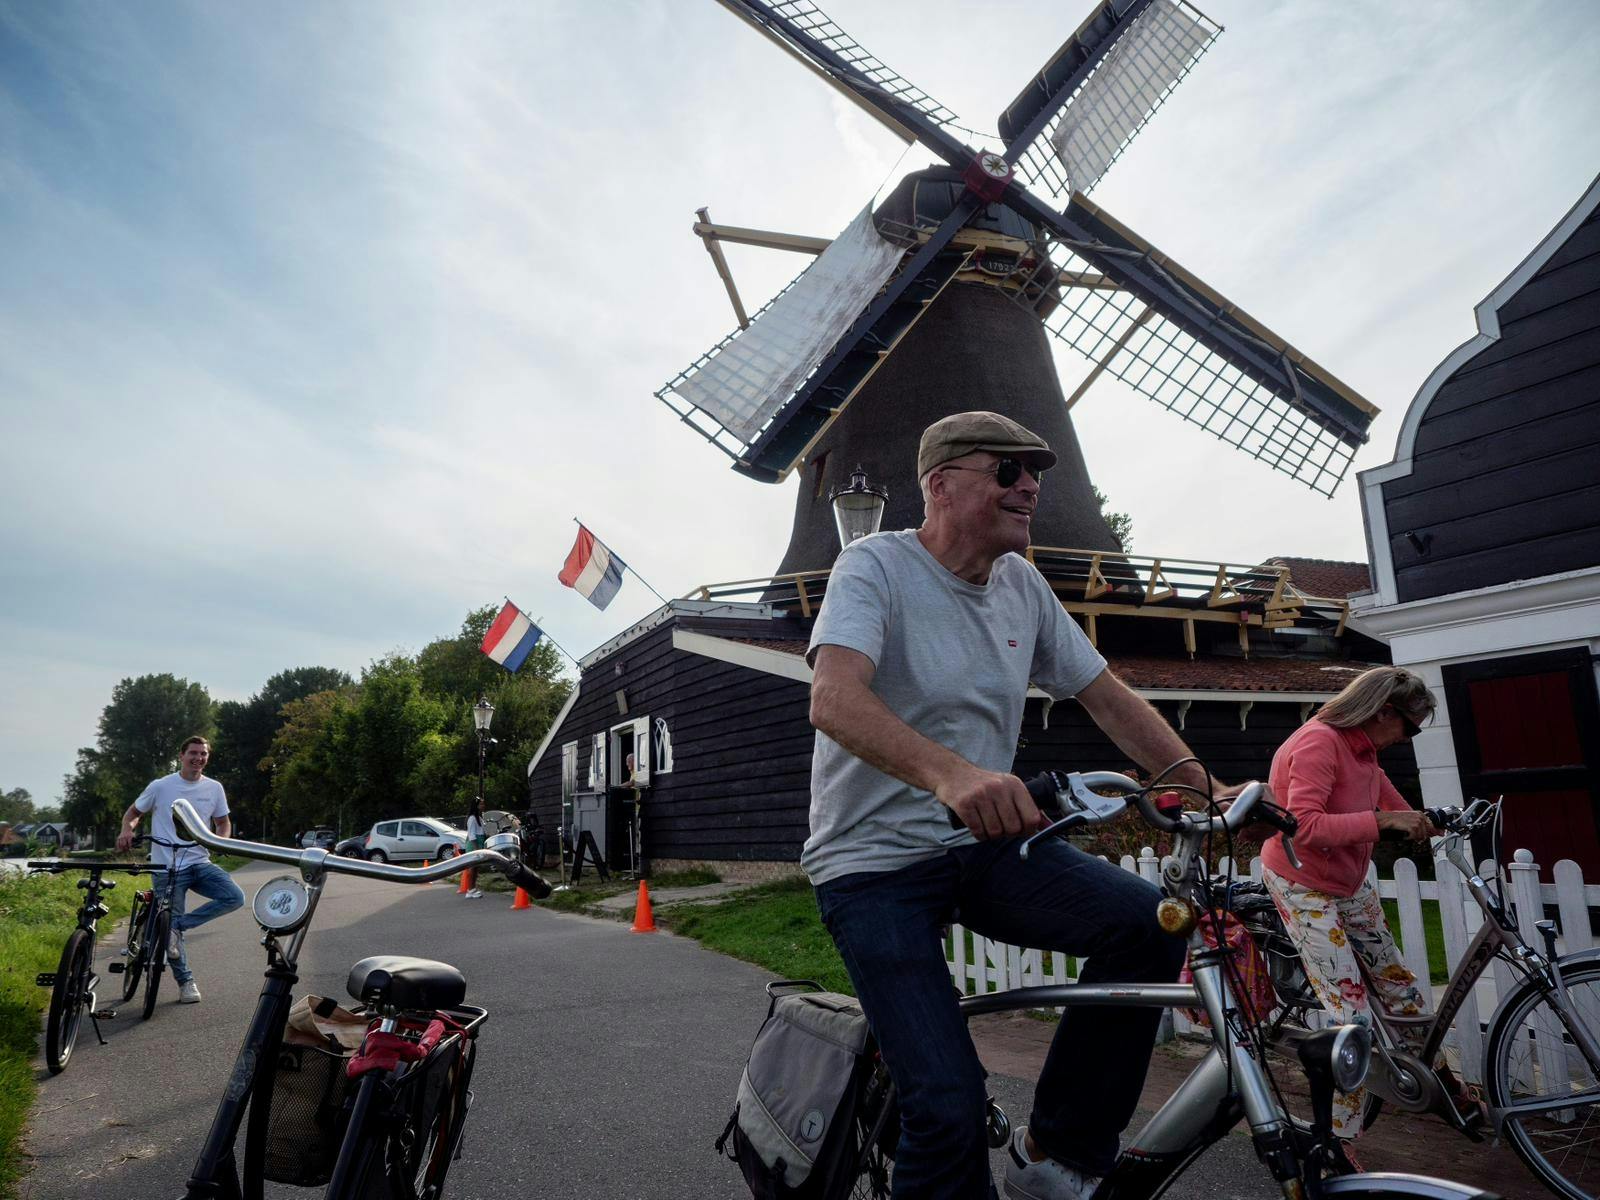 Tour in bici nella campagna di Amsterdam